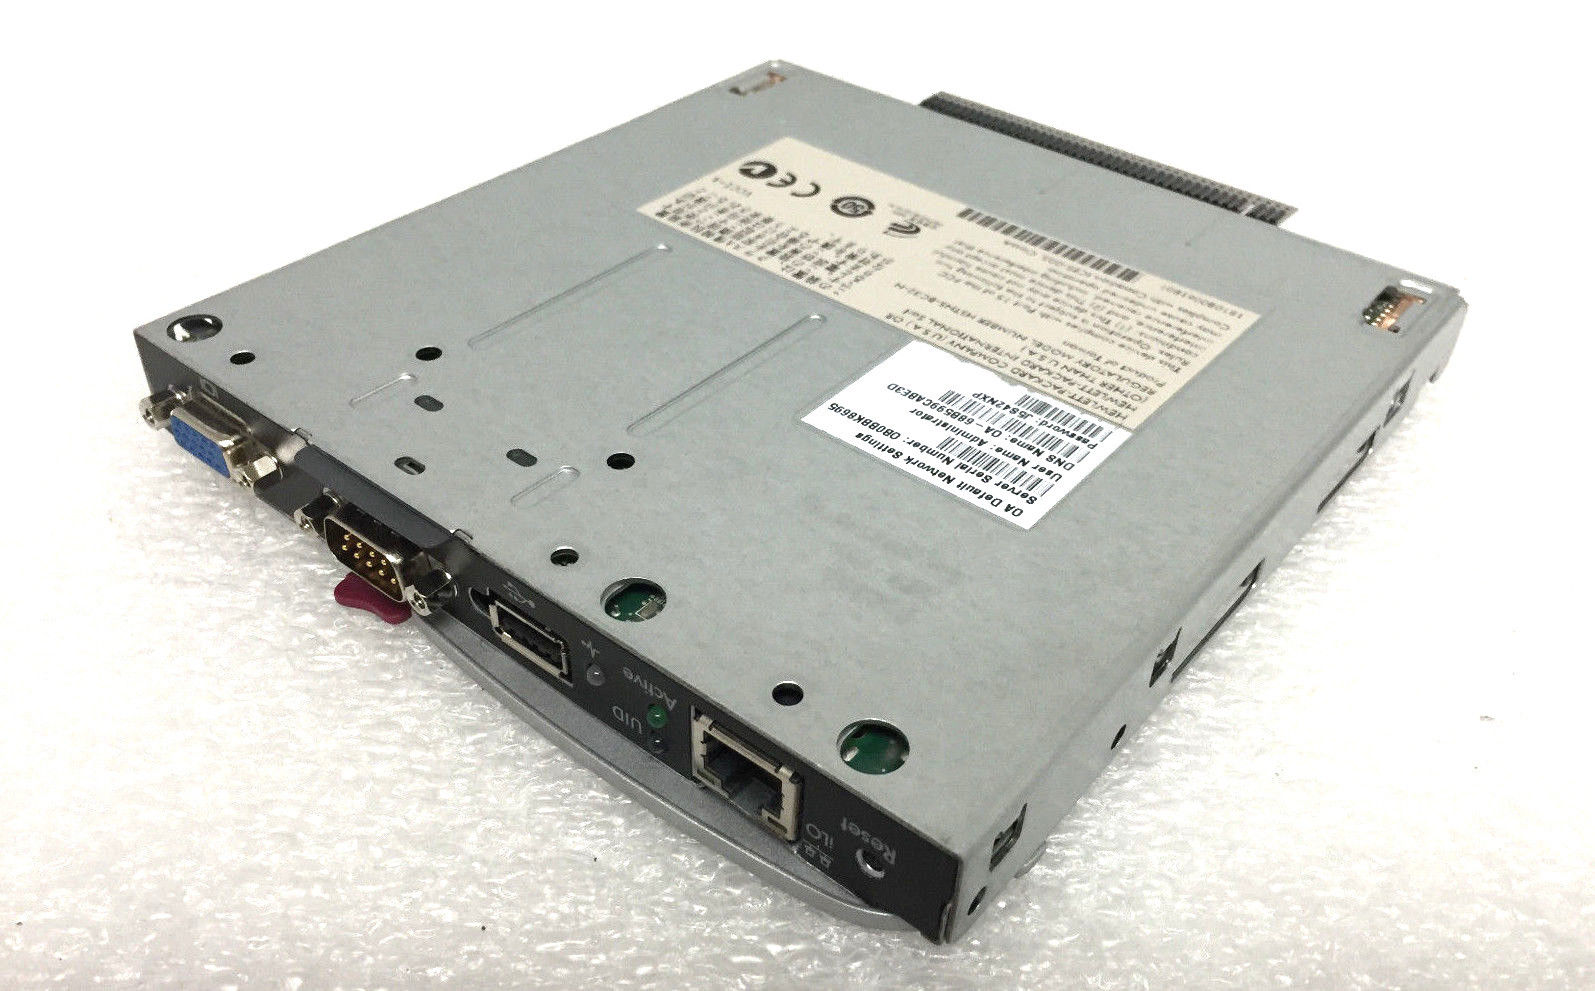 HP Bladecenter C7000 Onboard Admin Module With Kvm Option (503826-001)